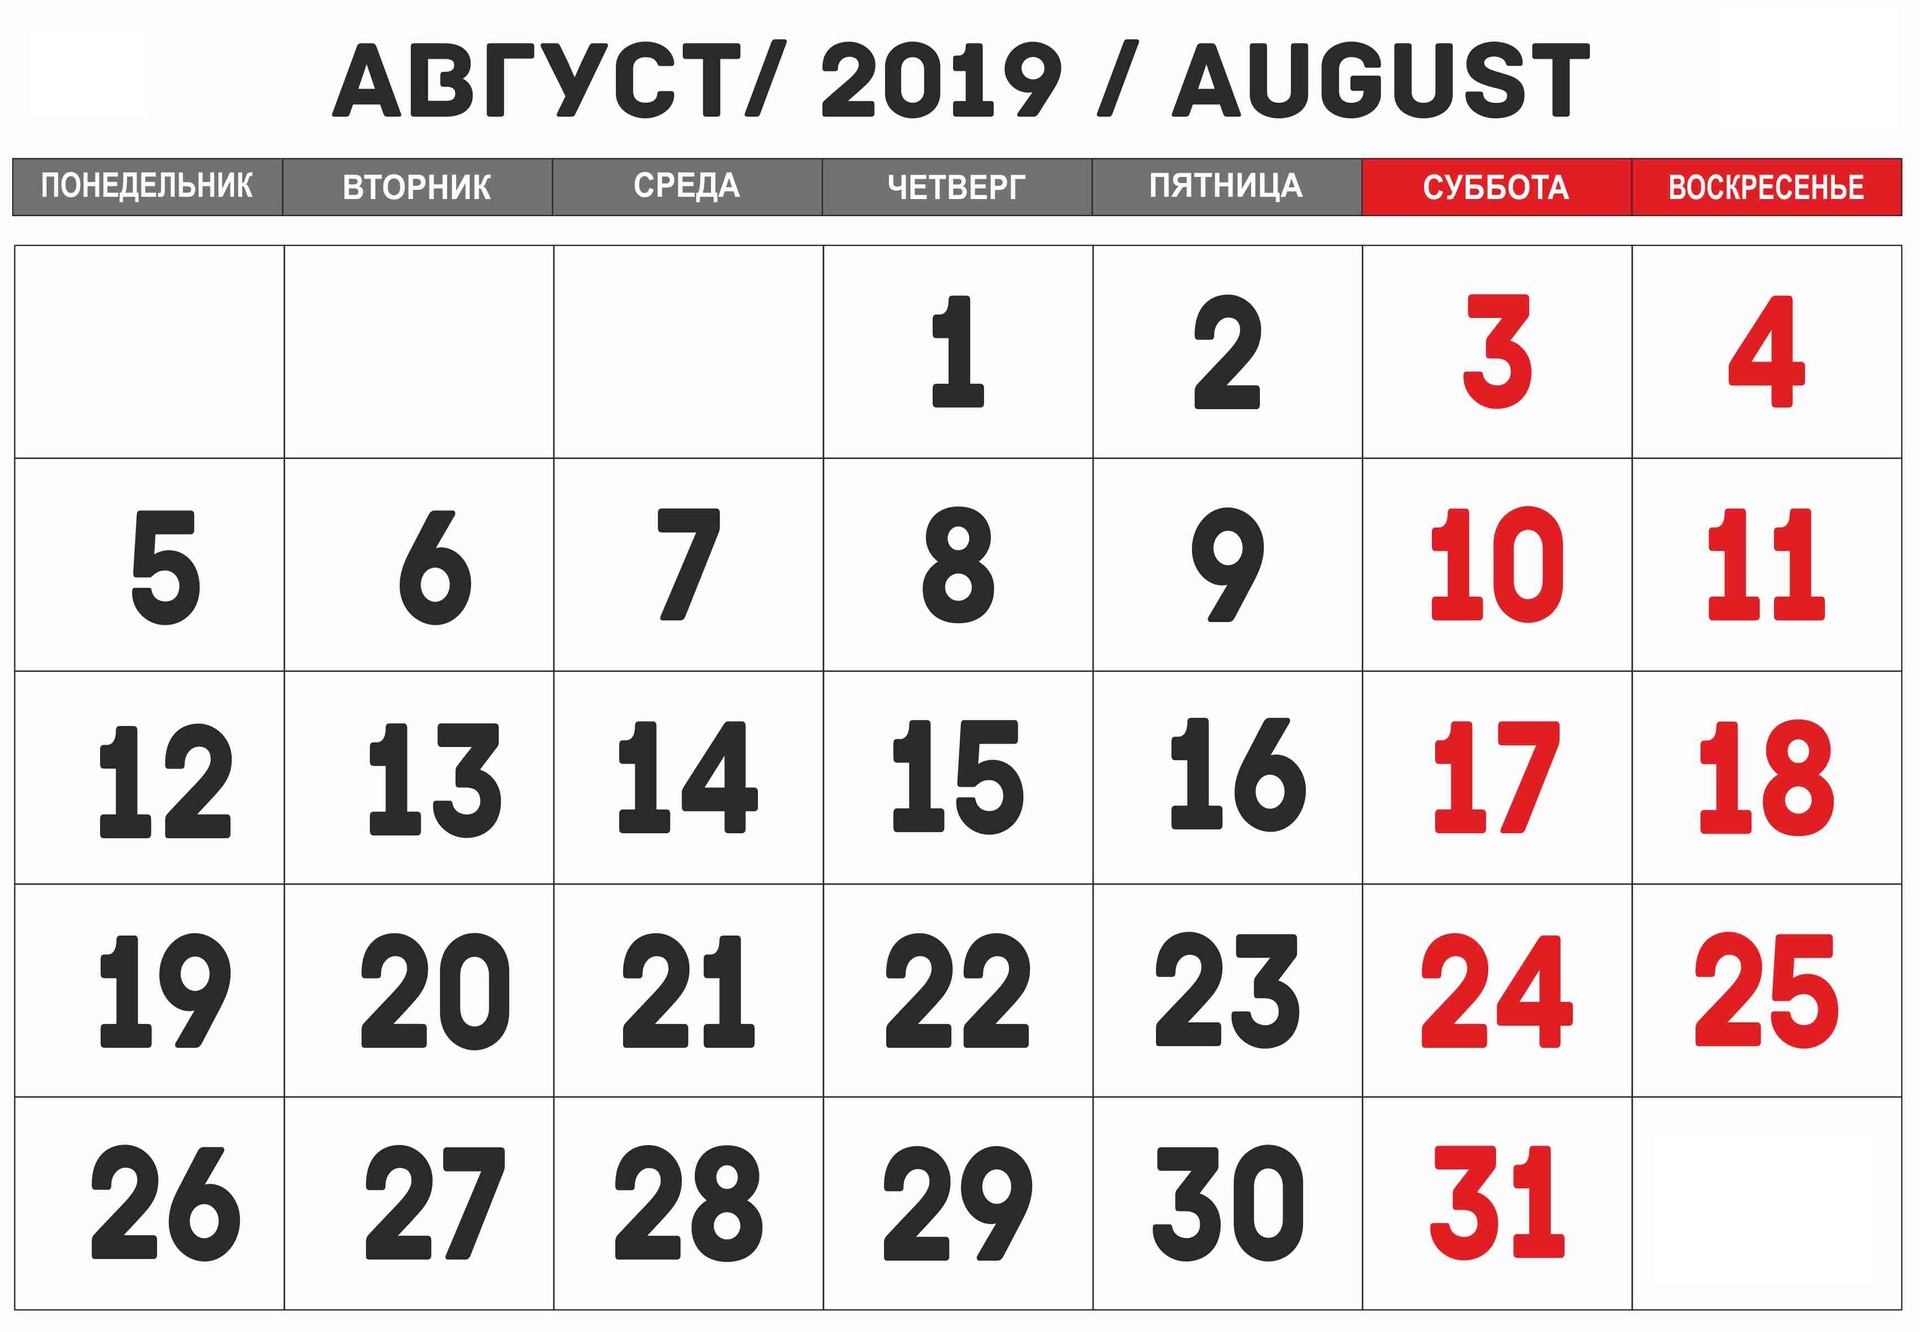 4 октября 2019 года день. Сентябрь 2019 года. Календарь август. Август 2019 календарь. Календарь август сентябрь.